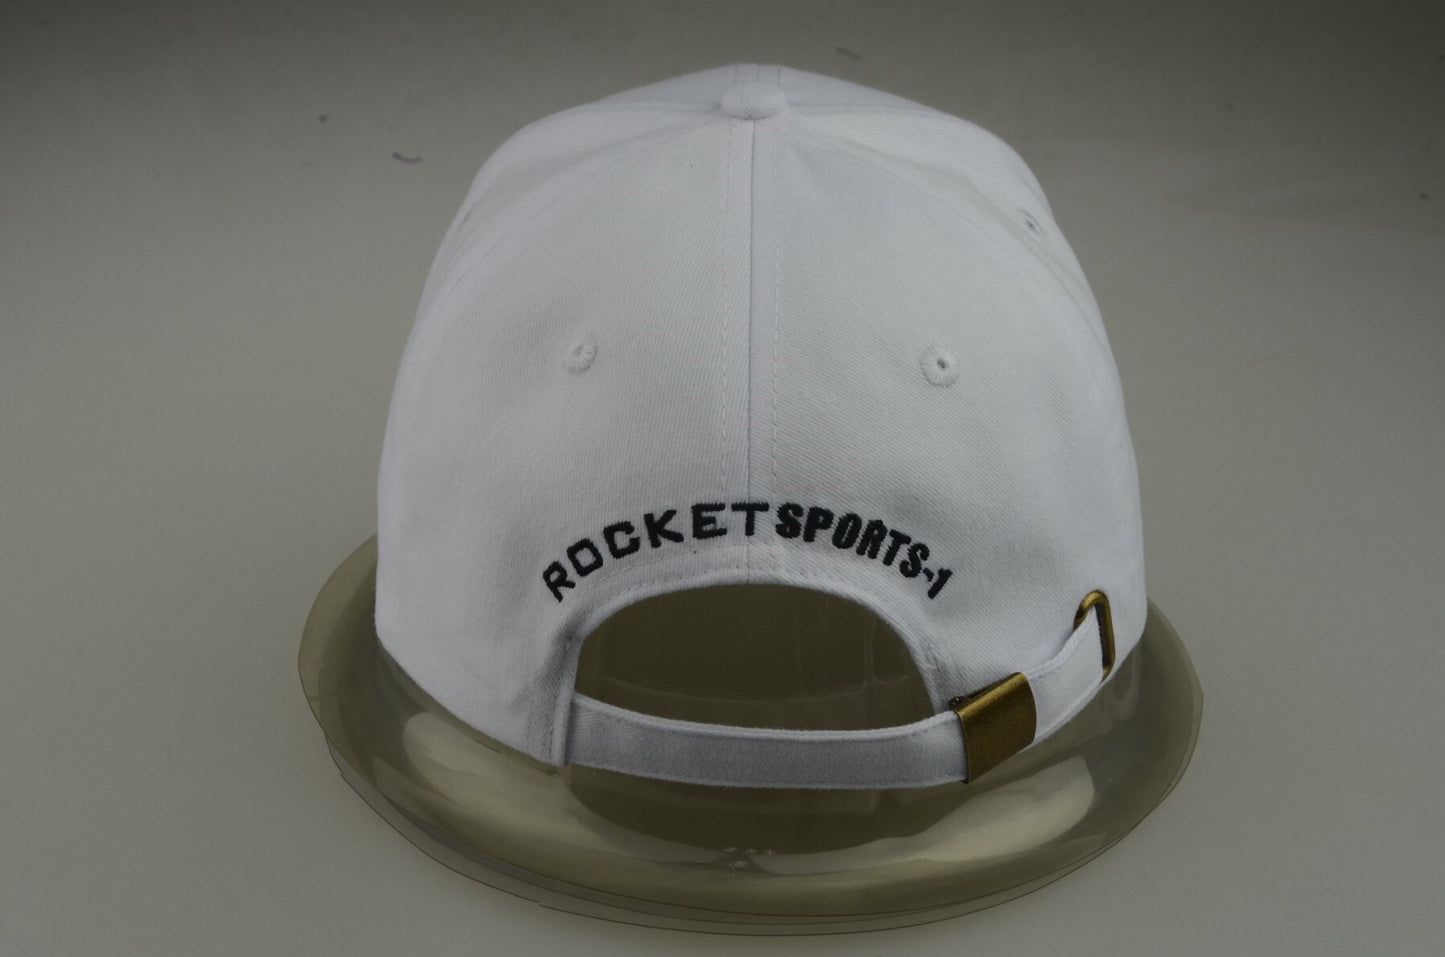 ROCKETSPORTS-1 Unisex Sports Cap